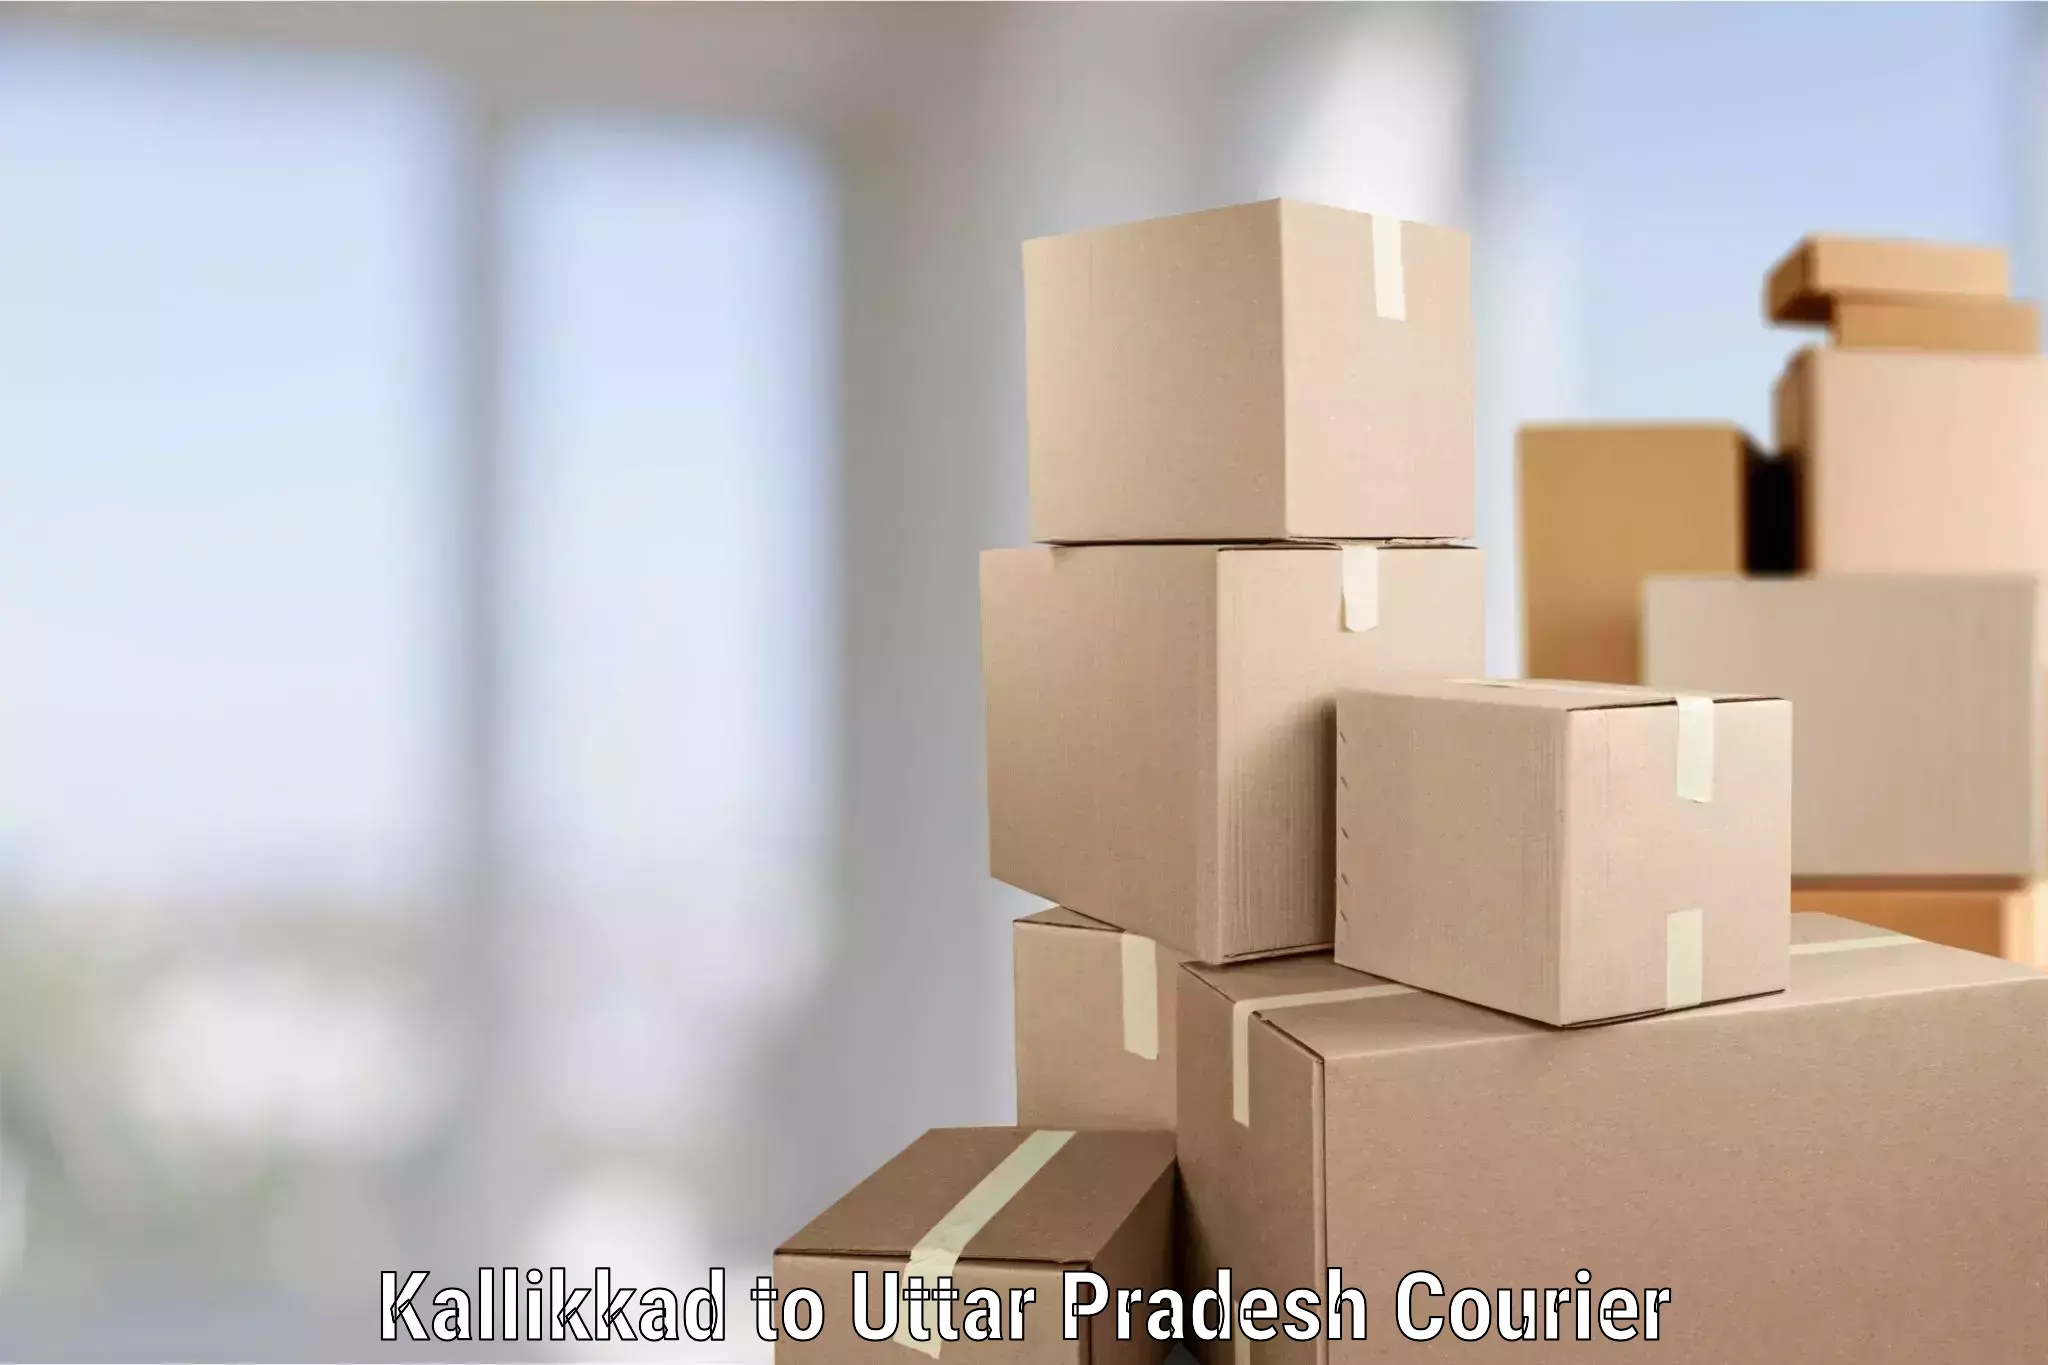 Professional moving company Kallikkad to Uttar Pradesh